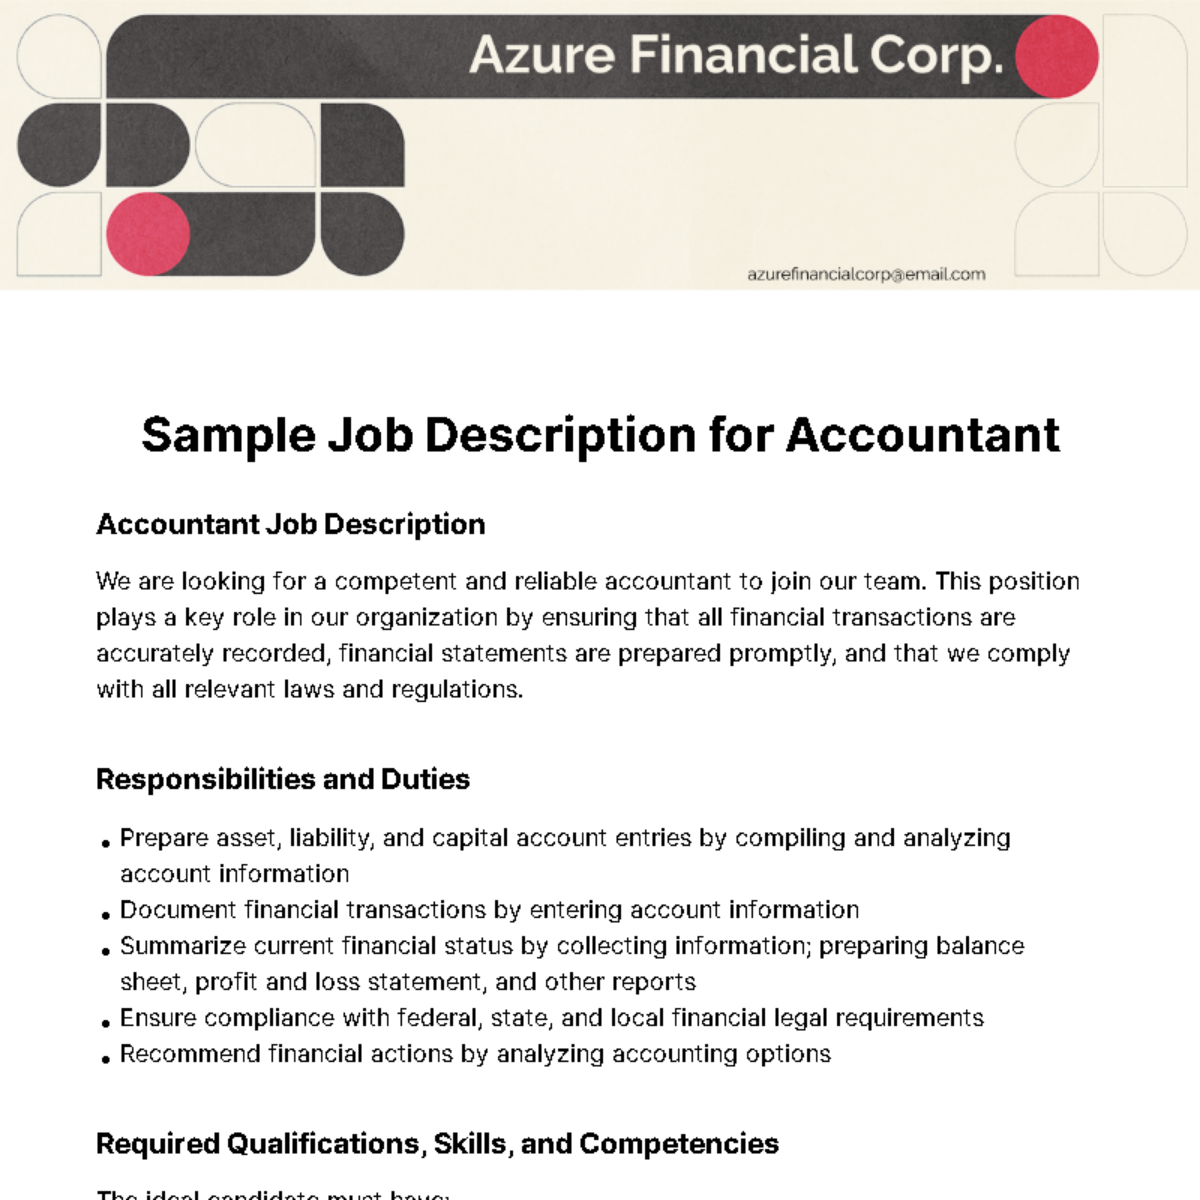 Sample Job Description for Accountant Template